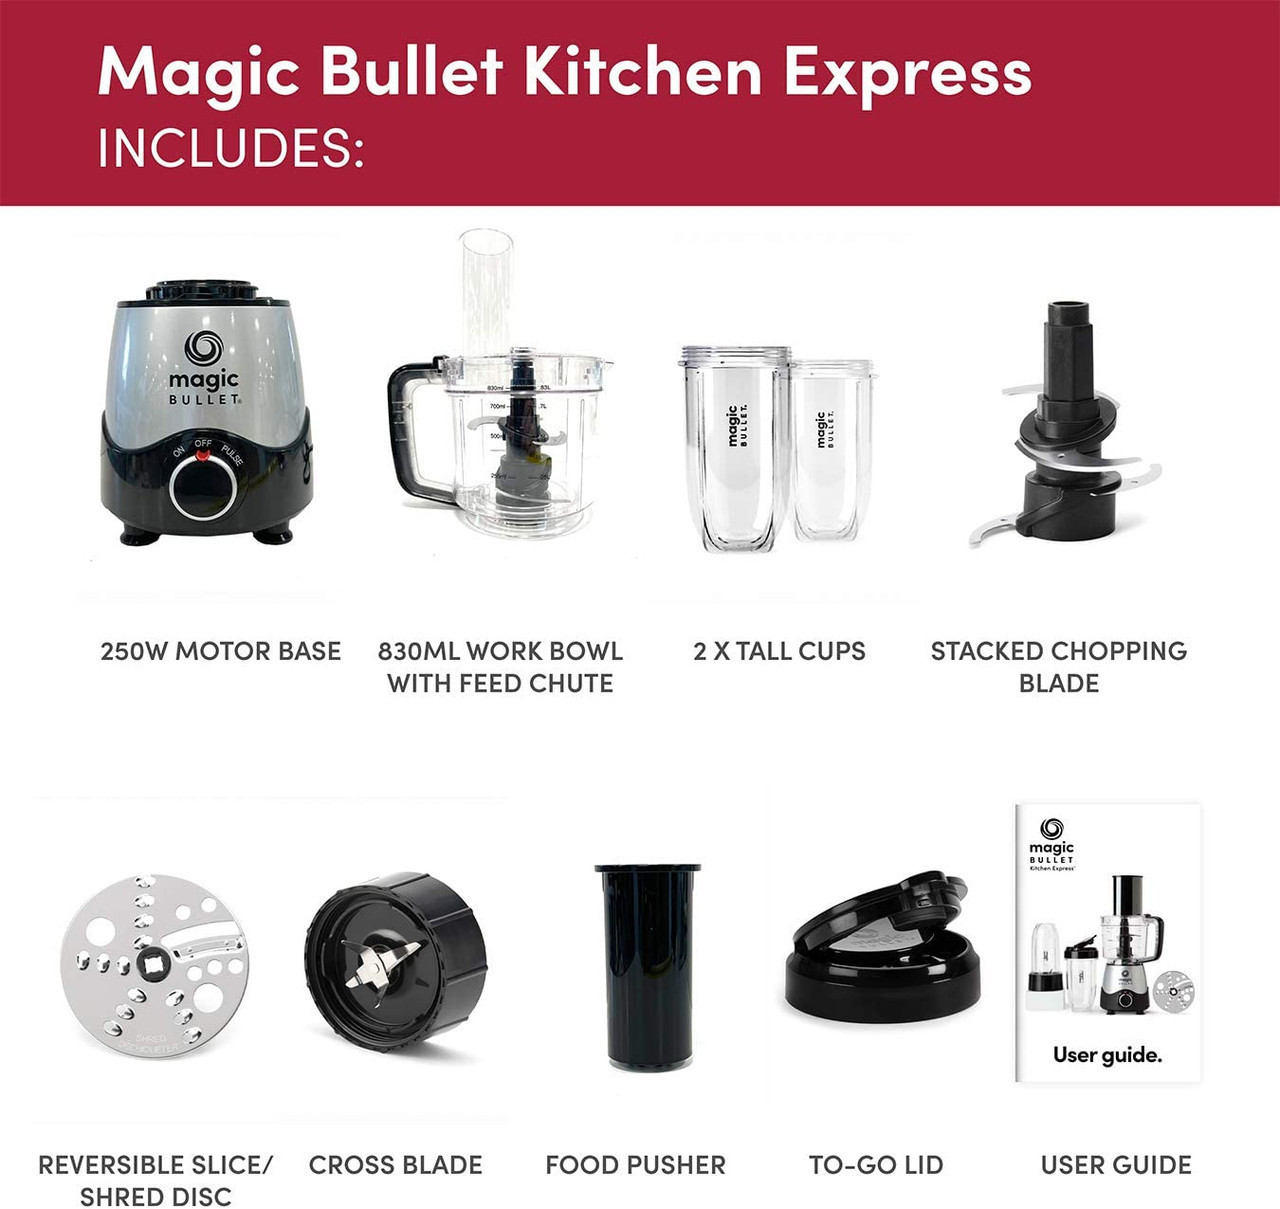 Nutribullet Magic Bullet Kitchen Express Food Processor Review